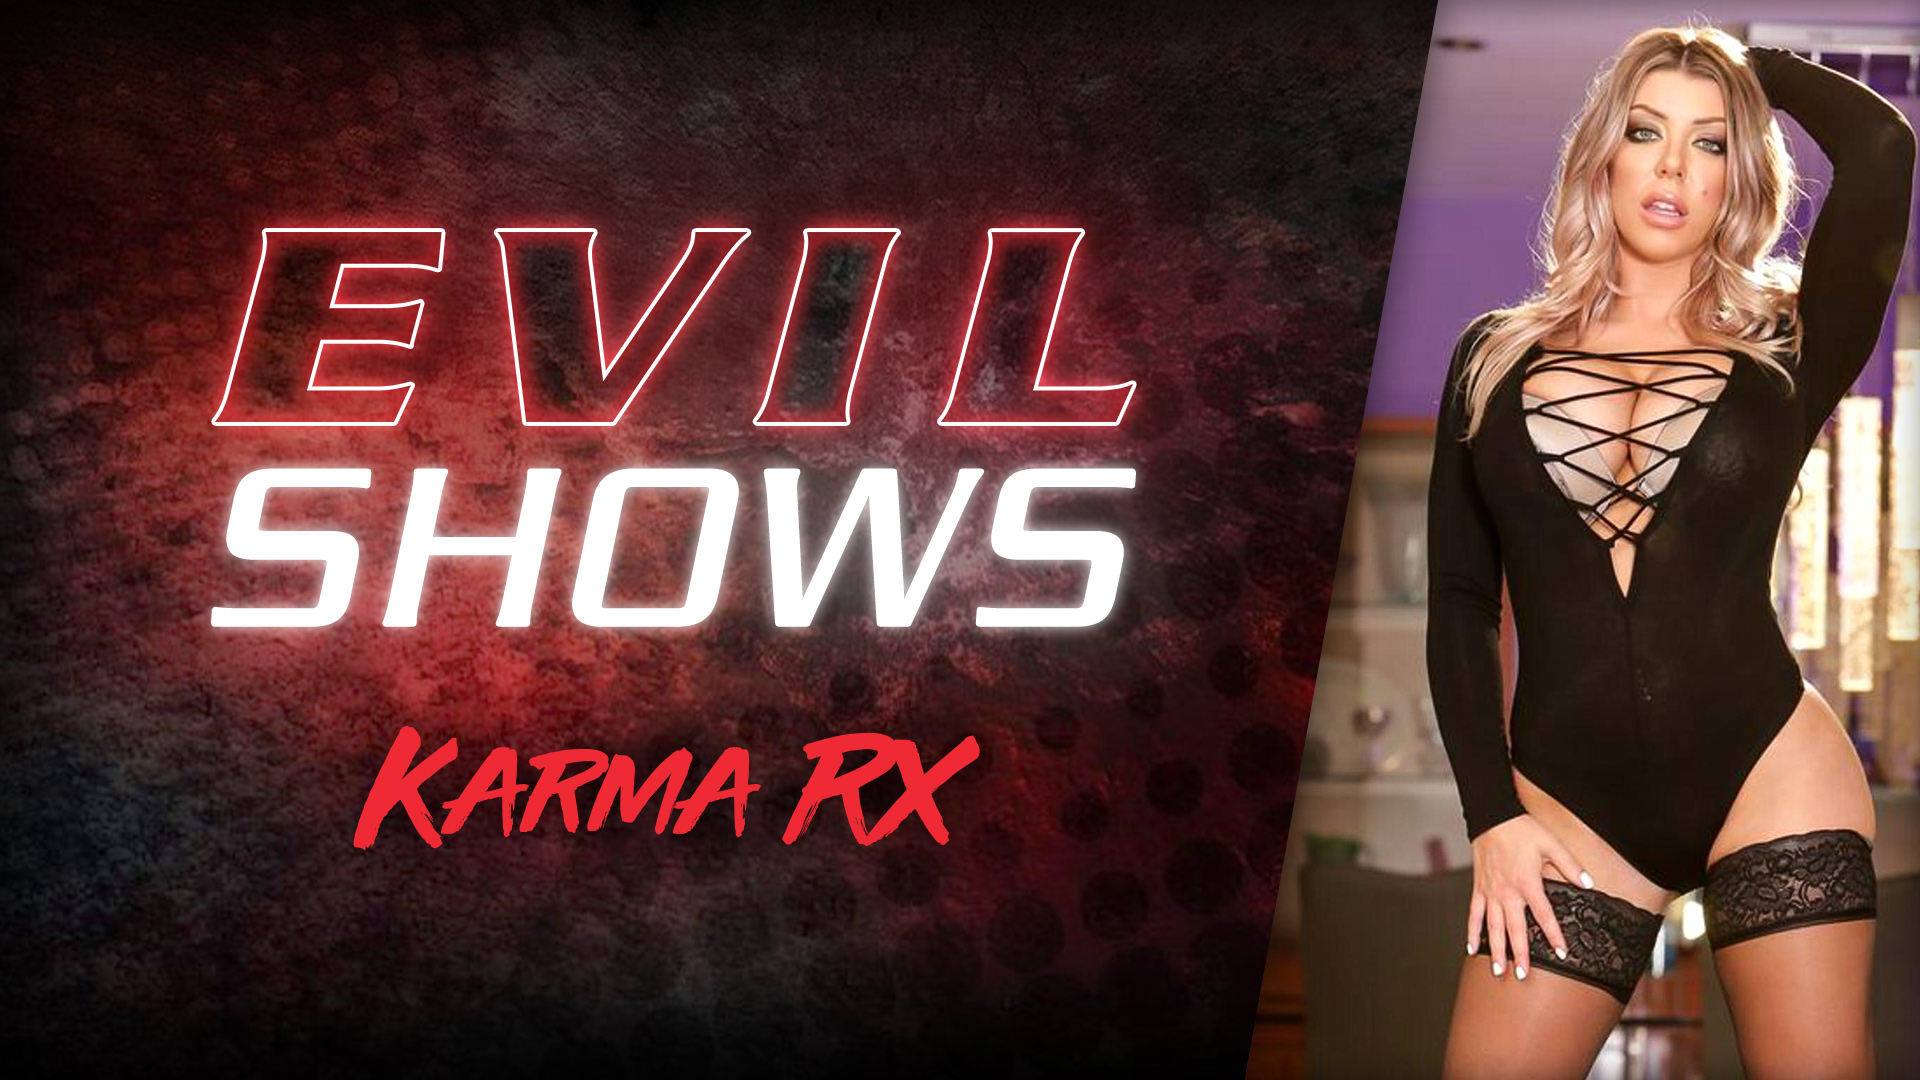 Evil shows karma rx karma rx Busty tattooed babe Karma RX